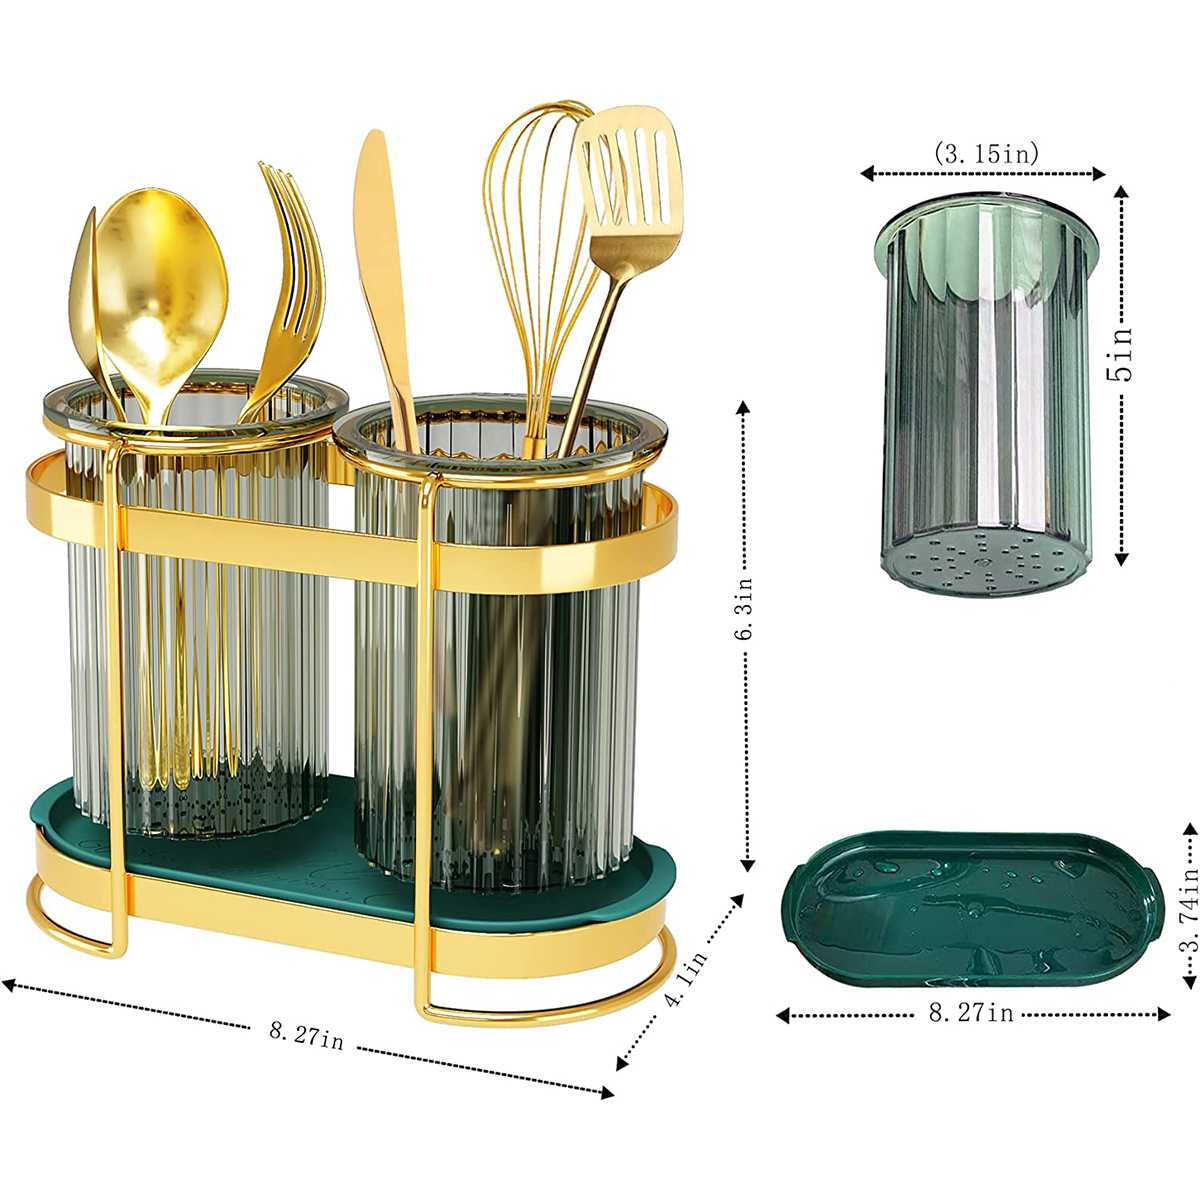 Regal Küchenutensilien Küche KÜLER Golden Besteck-Tube,